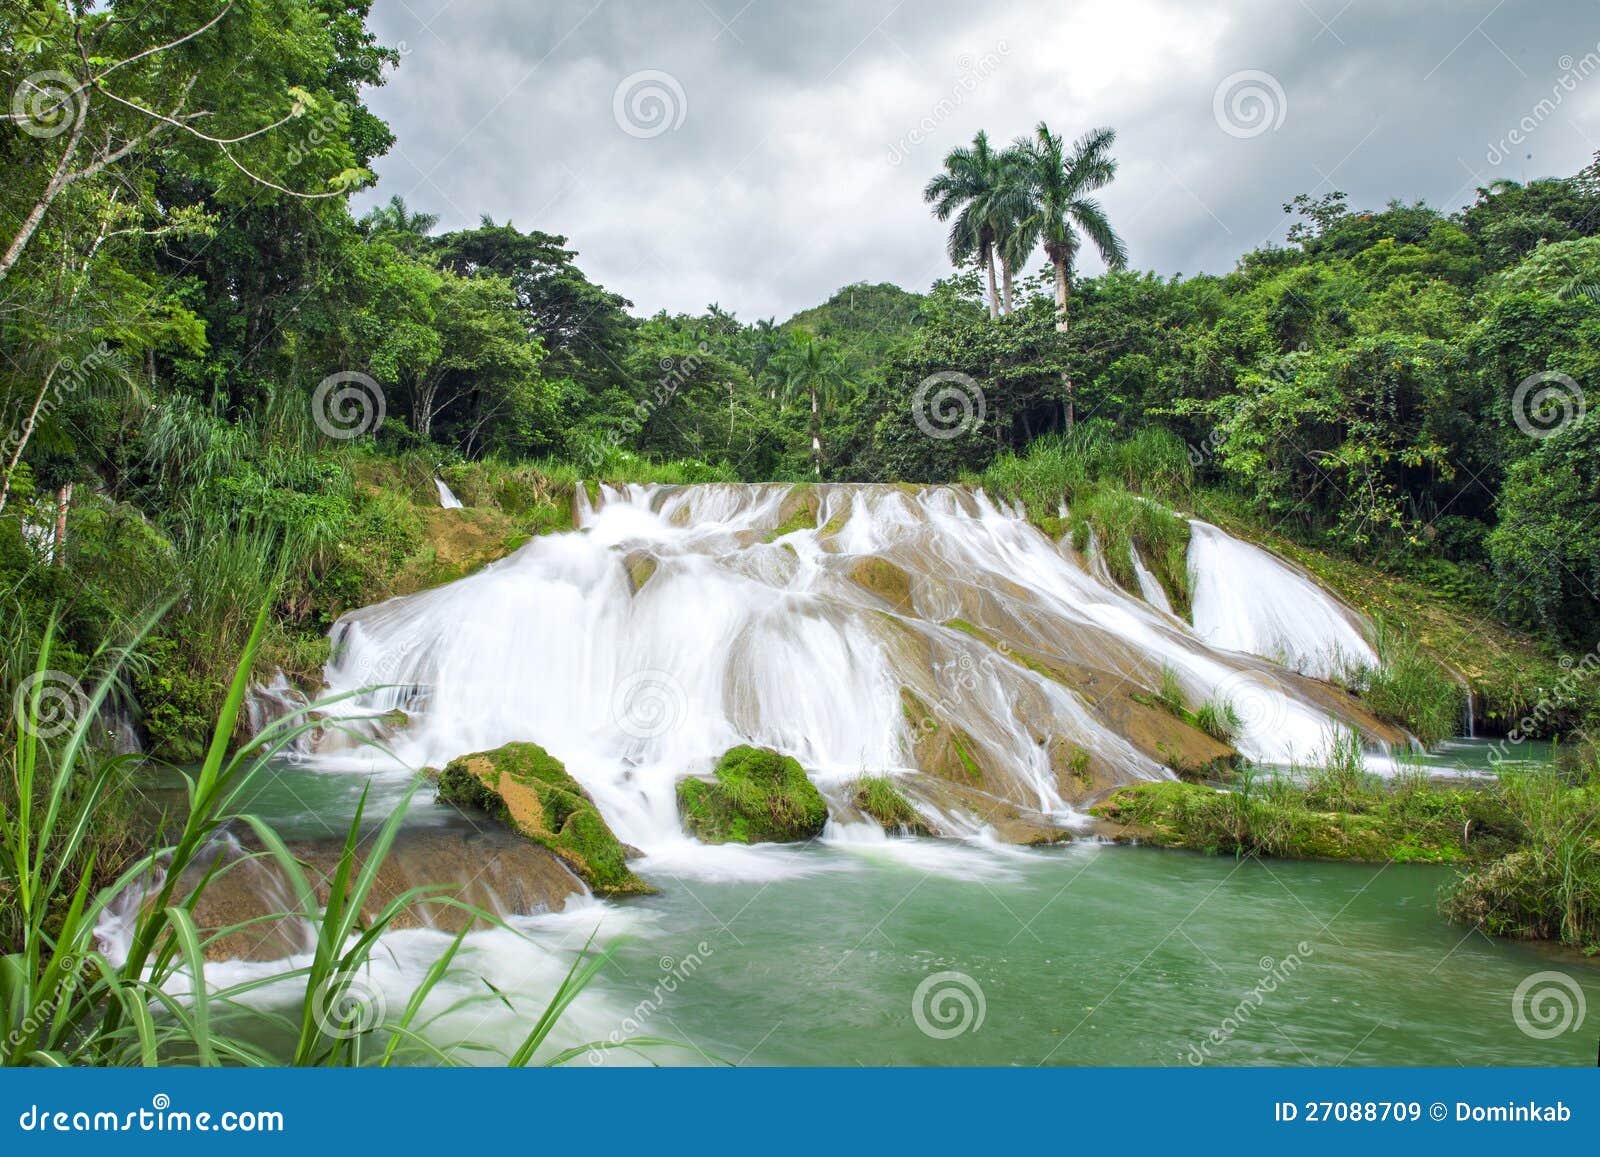 beautiful el nicho waterfall cuba